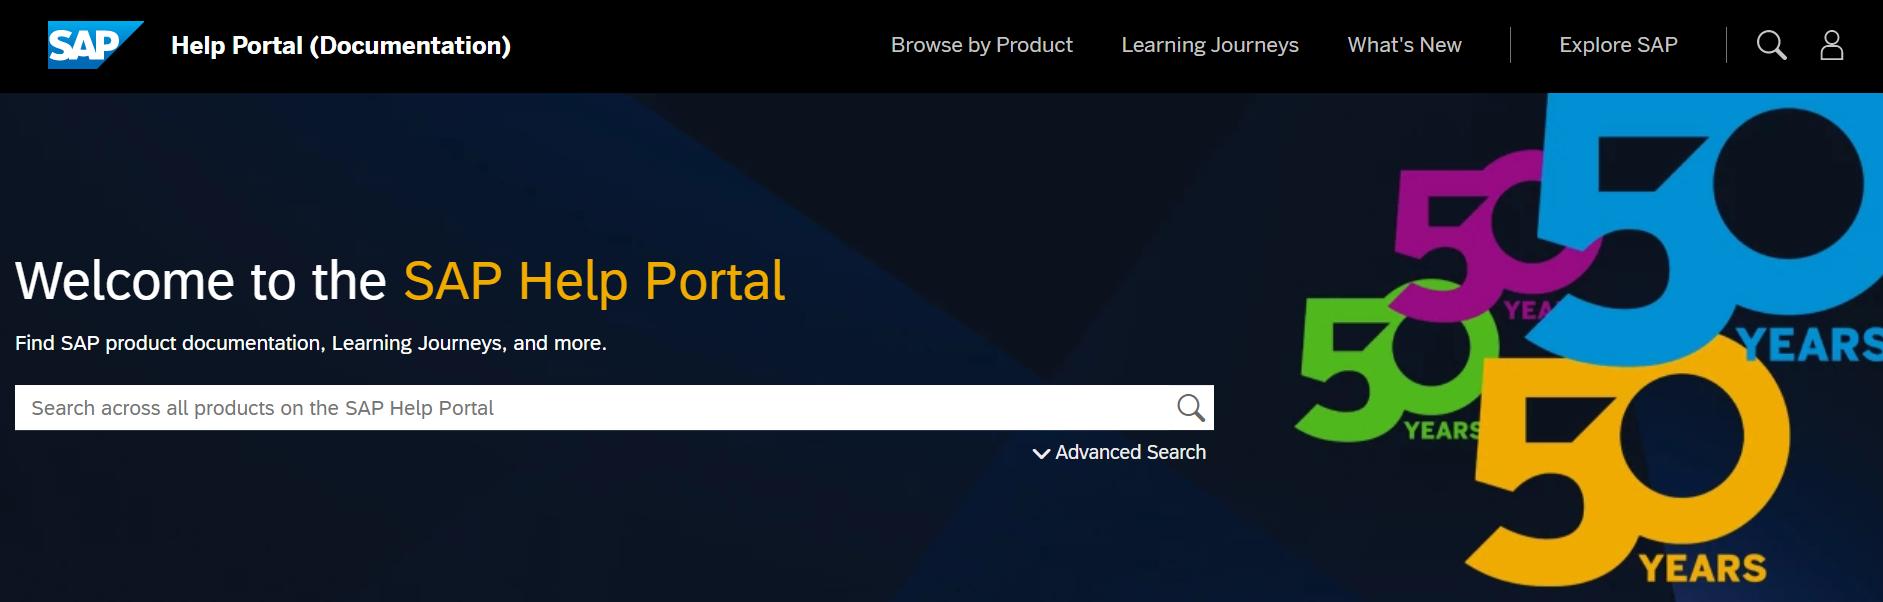 SAP Help Portal Snapshot